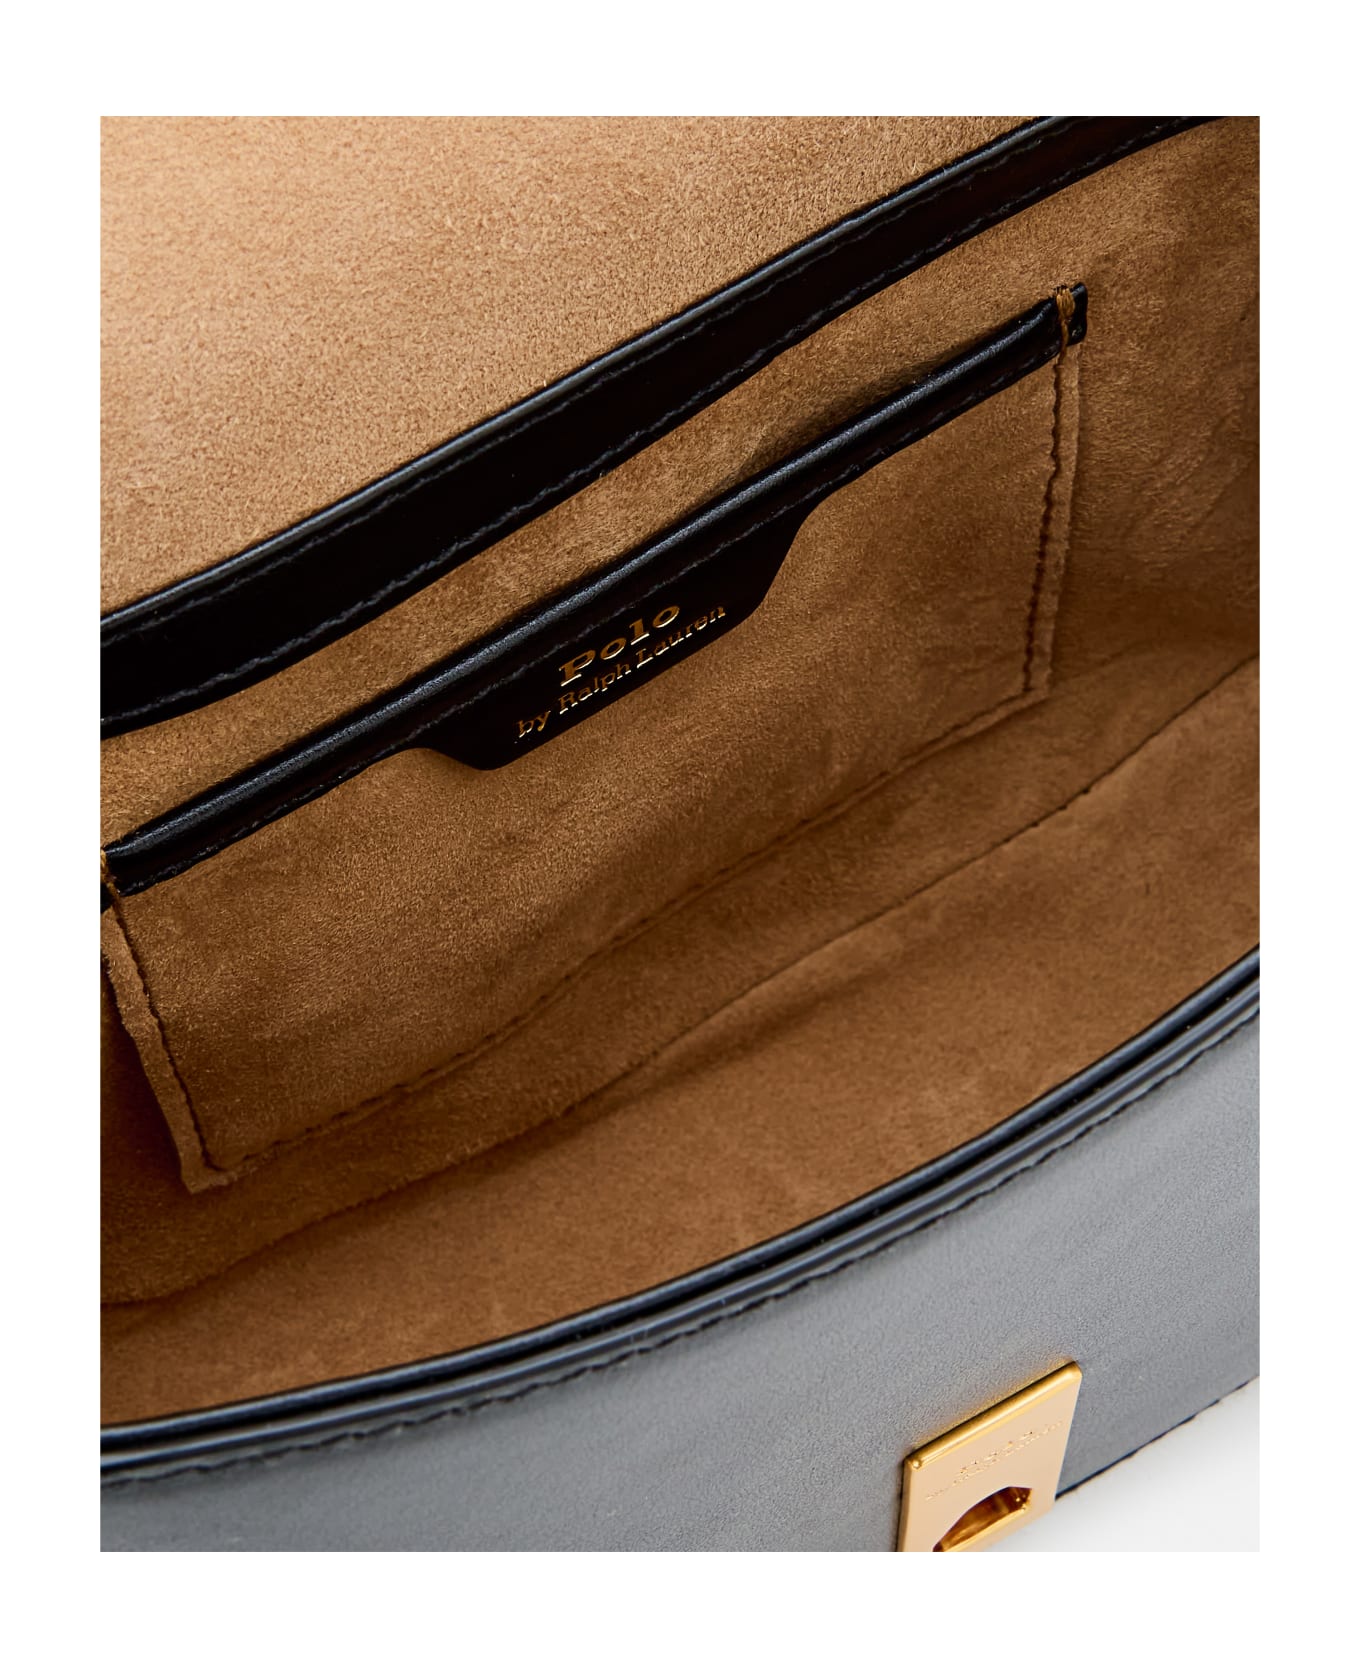 Polo Ralph Lauren Small Satchel Crossbody Leather Bag - Black トートバッグ